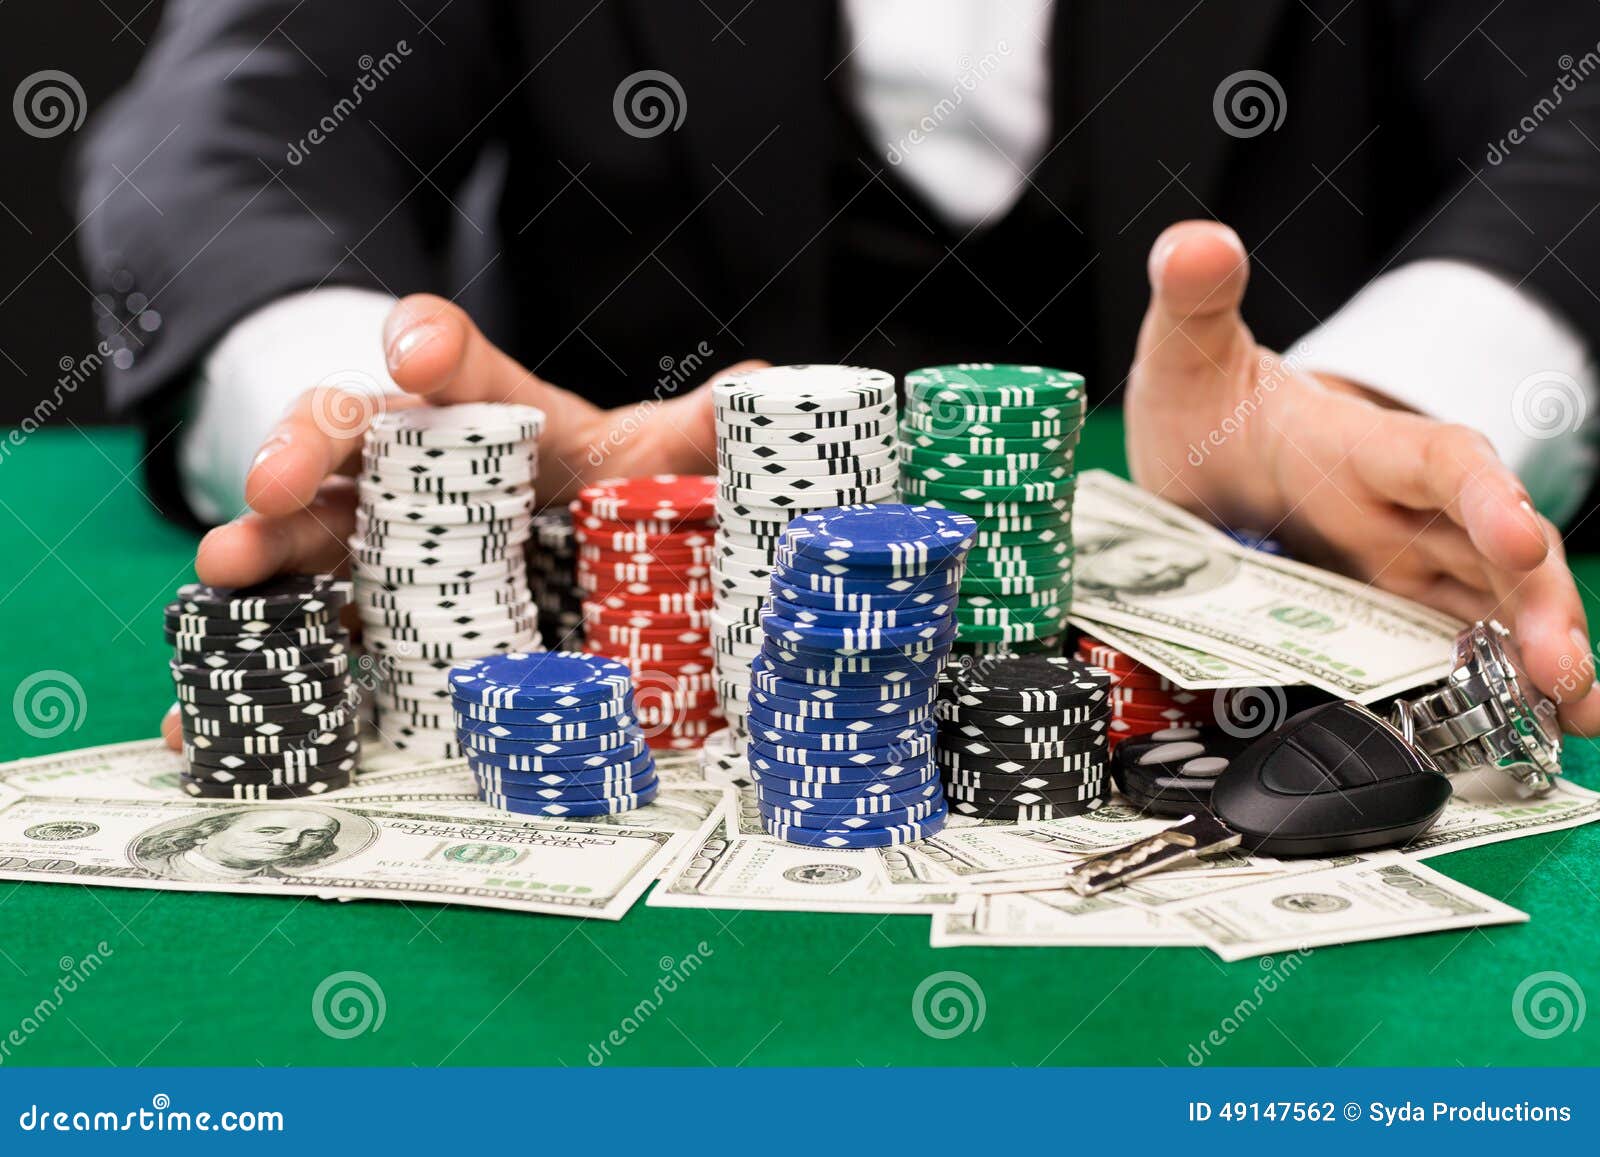 Making Money At Casinos